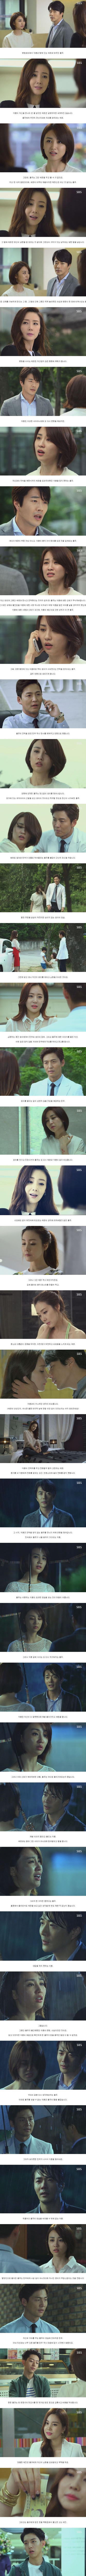 episode 5 captures for the Korean drama 'Temptation'